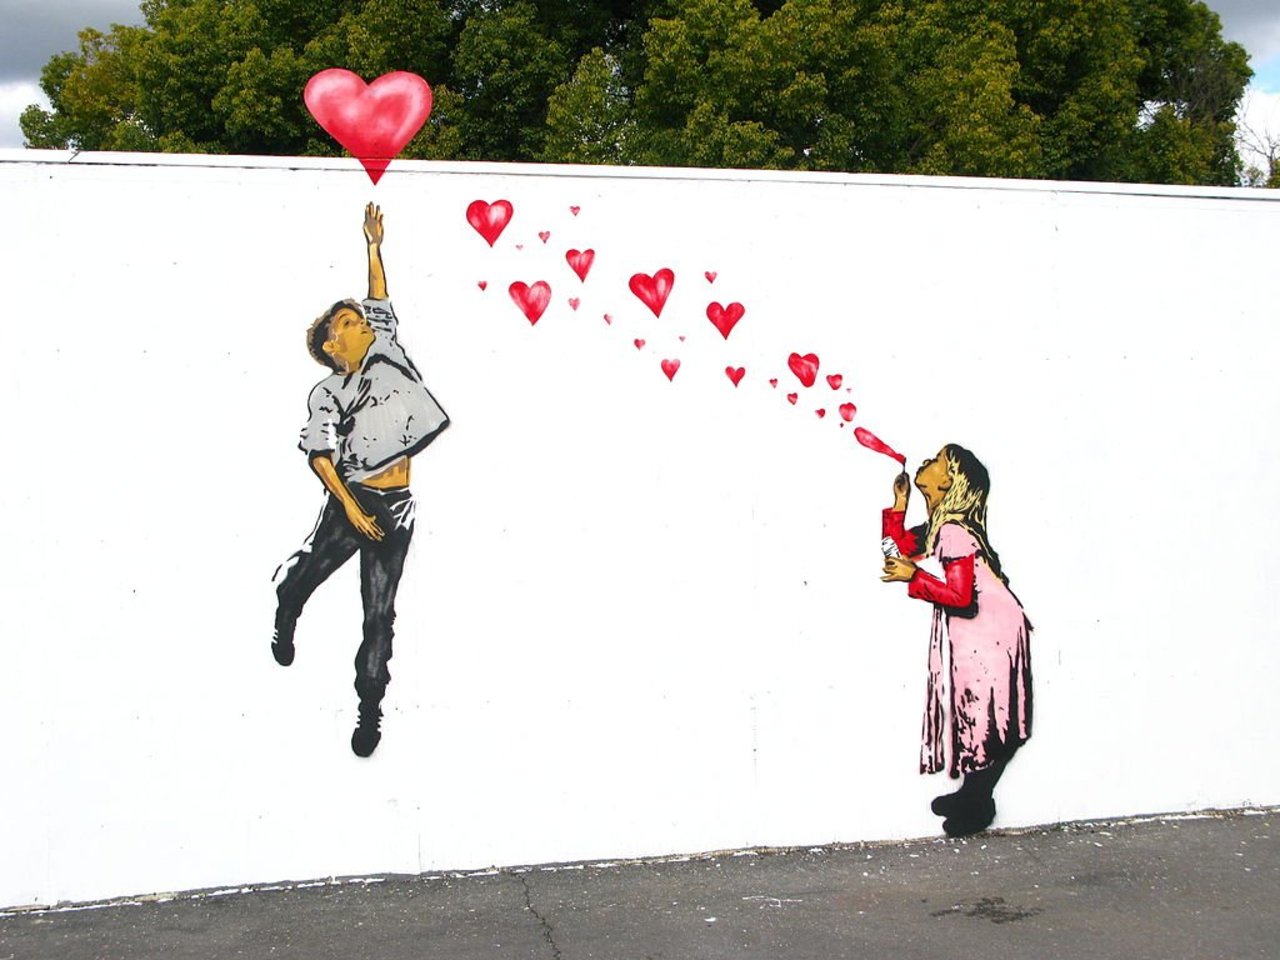 ... be a rebel, be yourself! Take your dream and... leave your mark! Goooodmorning! #Love #Heart #NeverGiveUp #StreetArt #Art #WakeUp #Graffiti #Goodmorning #Rebel #BeYourself #writerscommunity #Change #LeaveYourMark #FollowYourHeart #UrbanArt #Mural https://t.co/ofqmZYmgPw